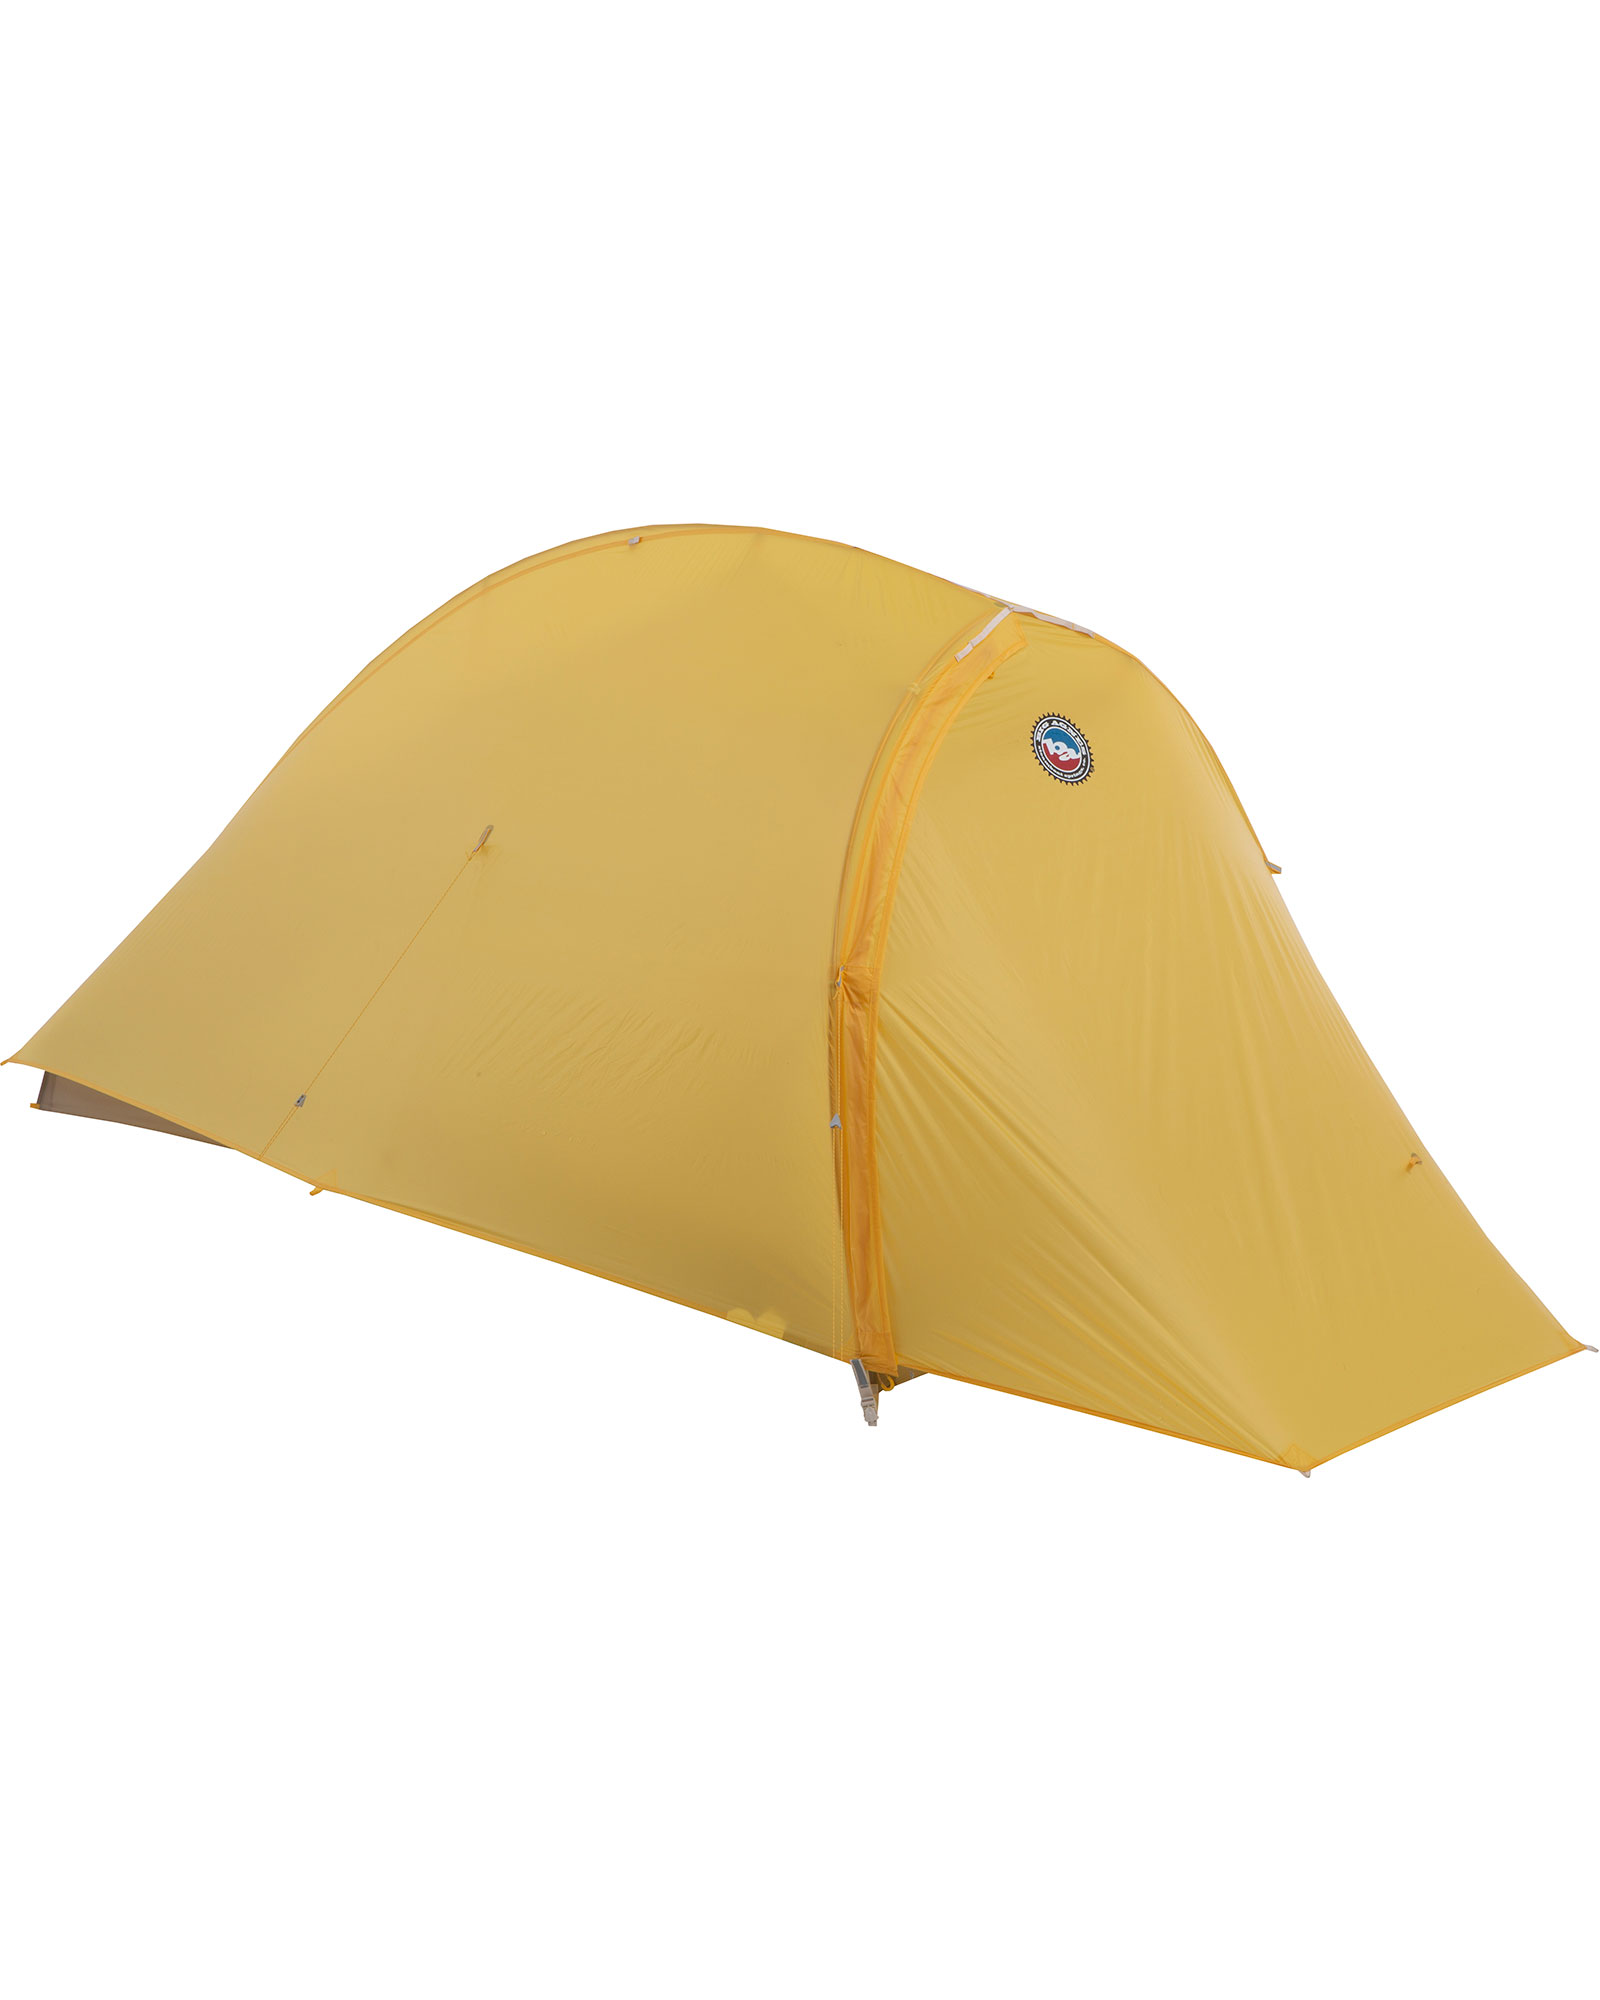 Big Agnes Fly Creek HV UL1 Bikepack Solution Dye Tent - Yellow